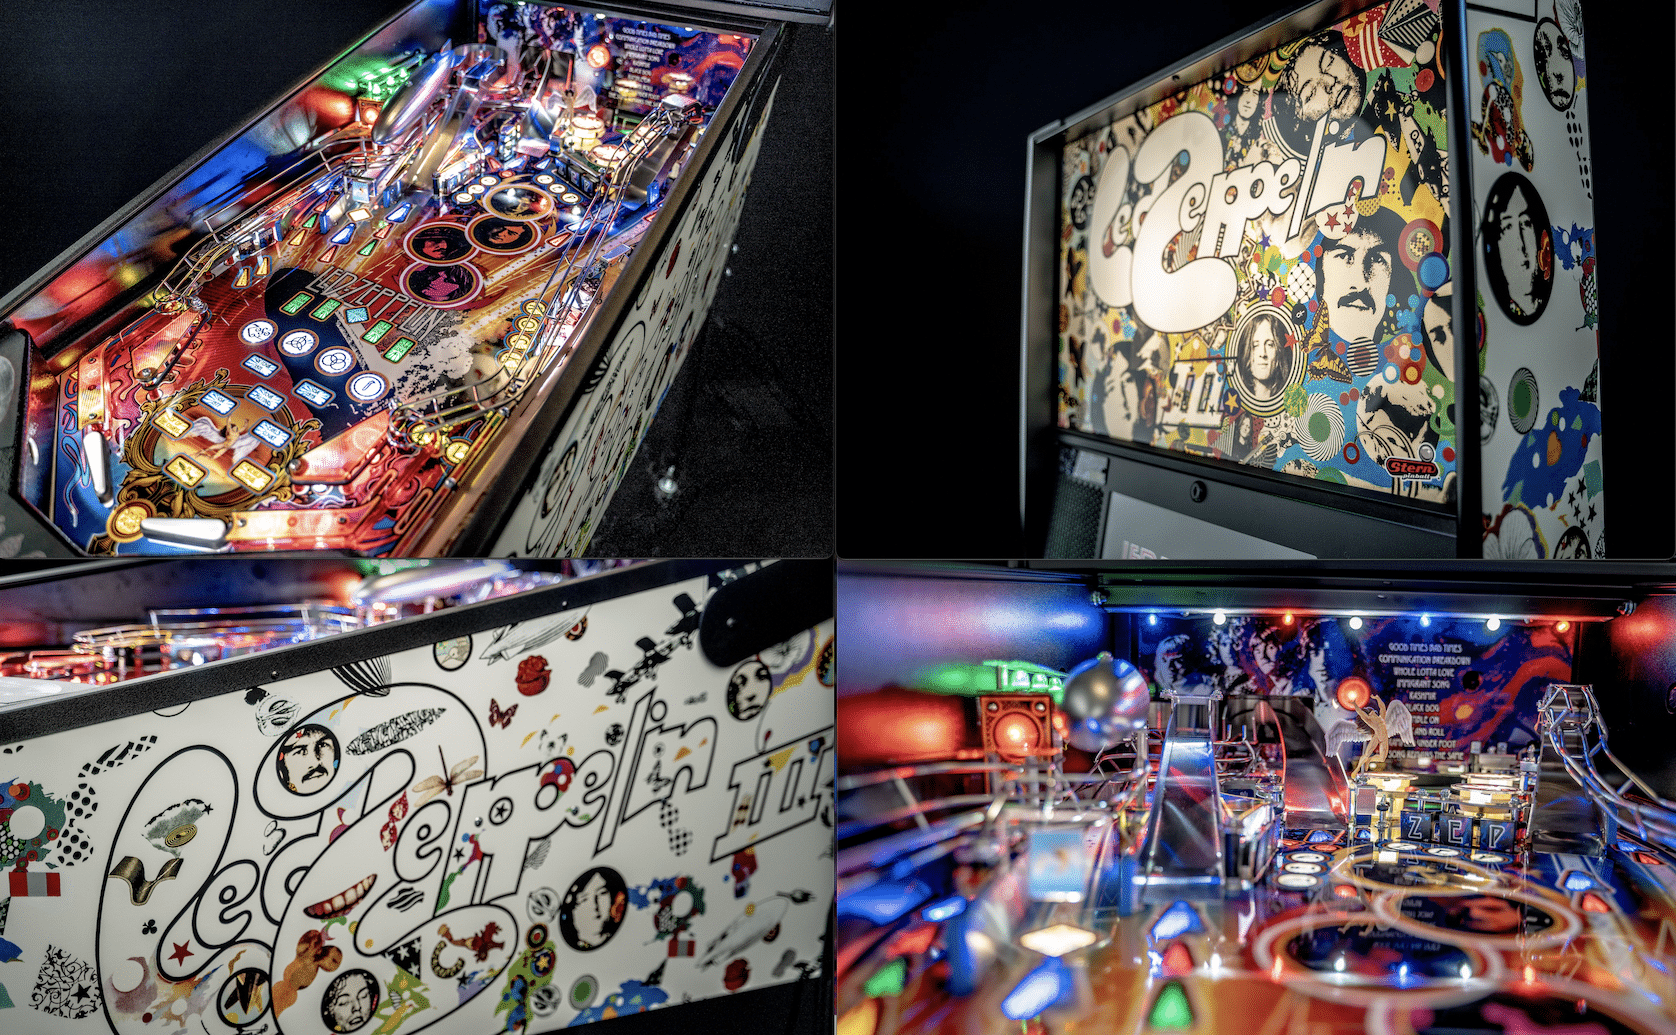 Led Zeppelin pinball machines